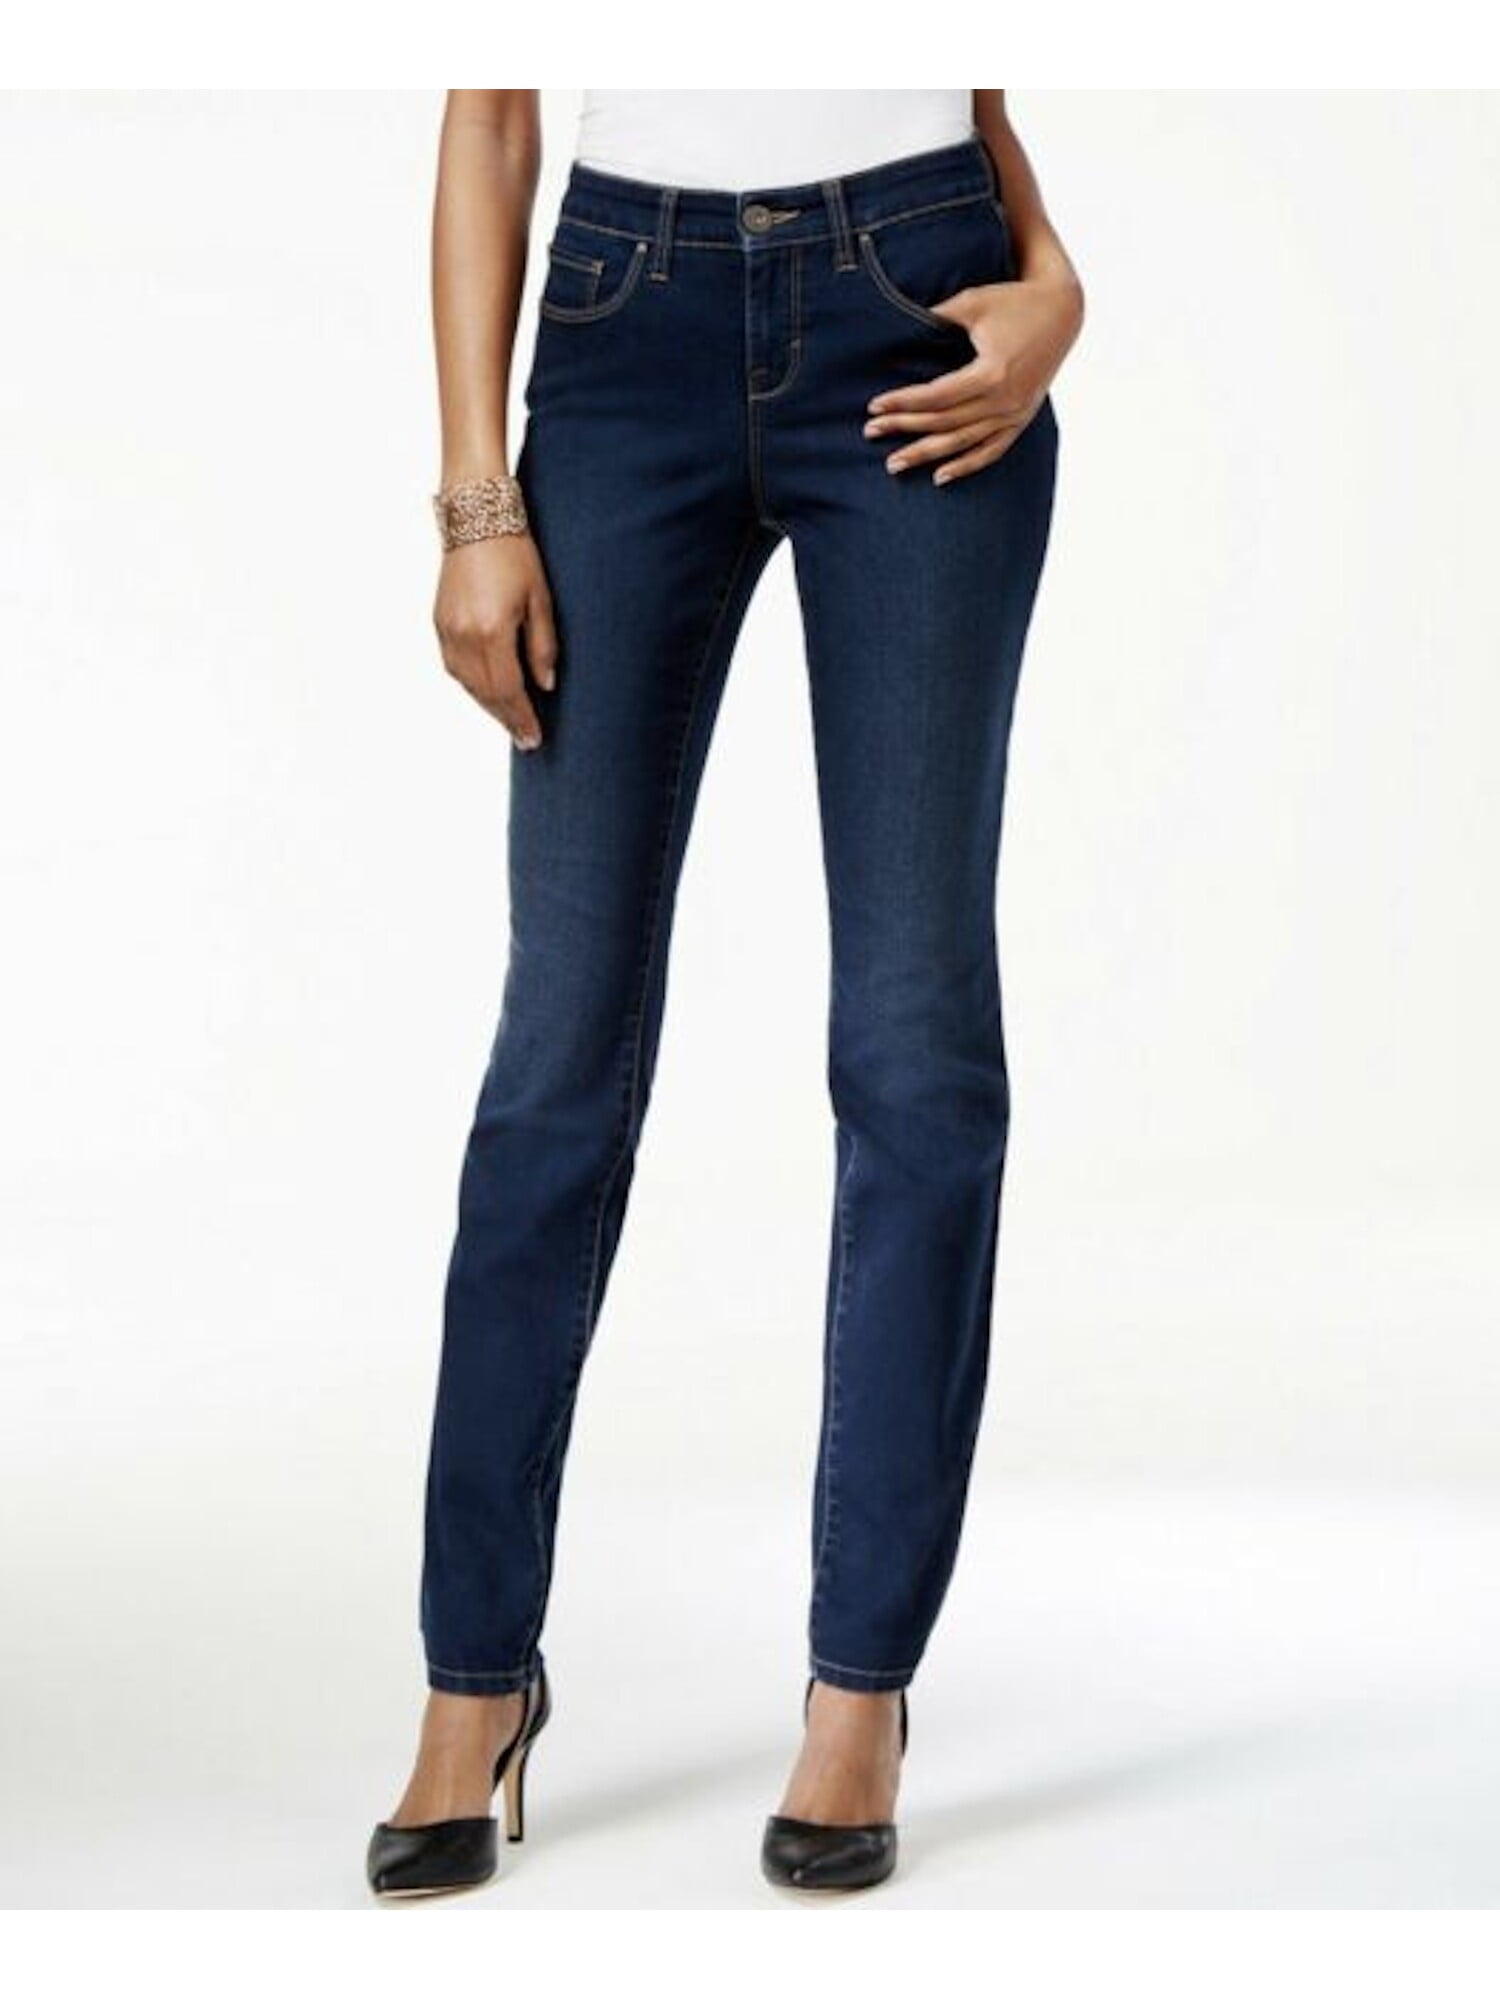 womens jeans size 16 short